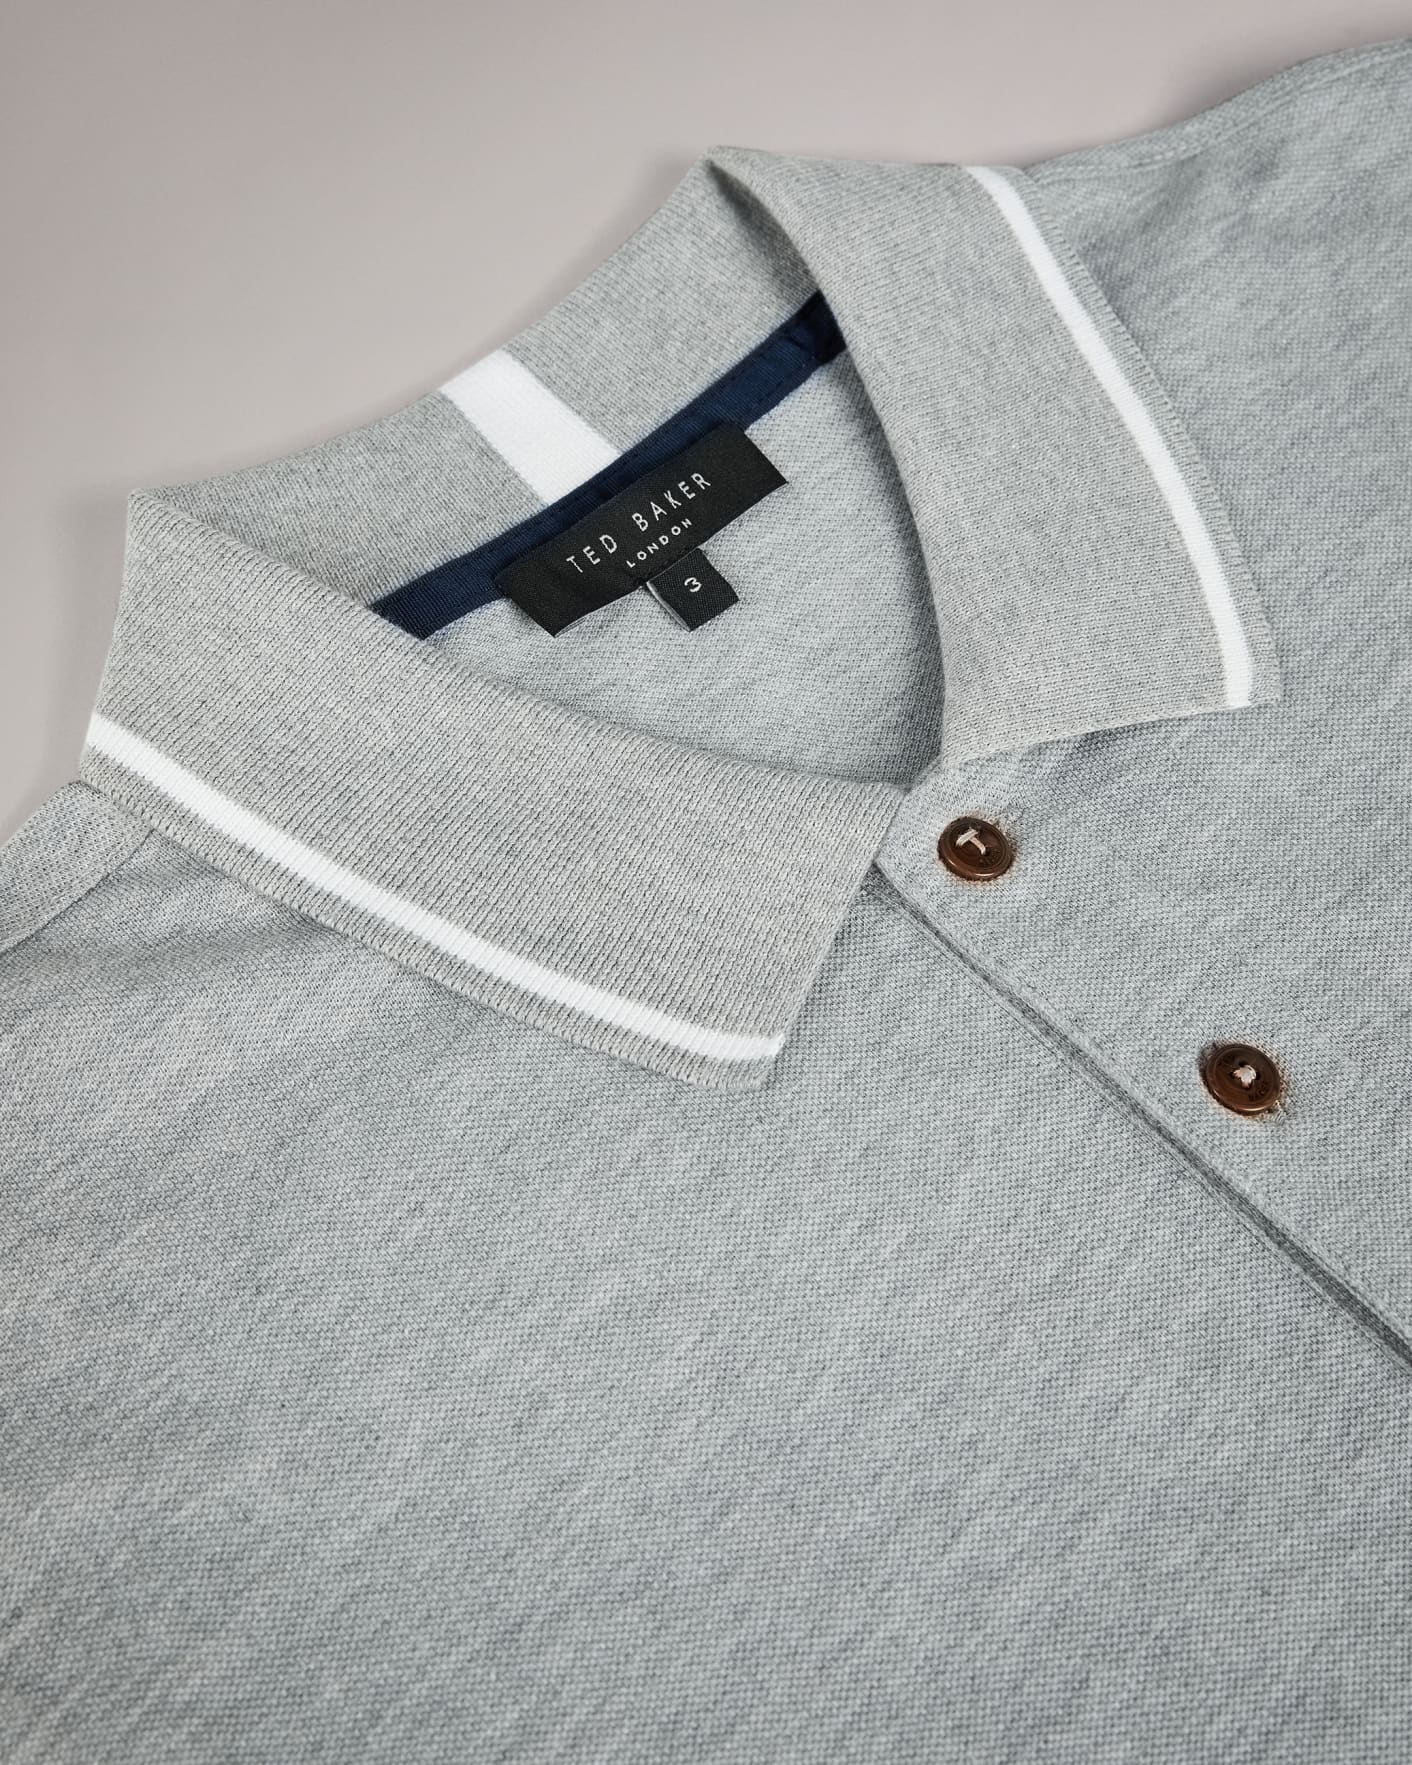 Light Grey Short Sleeve Polo Shirt Ted Baker